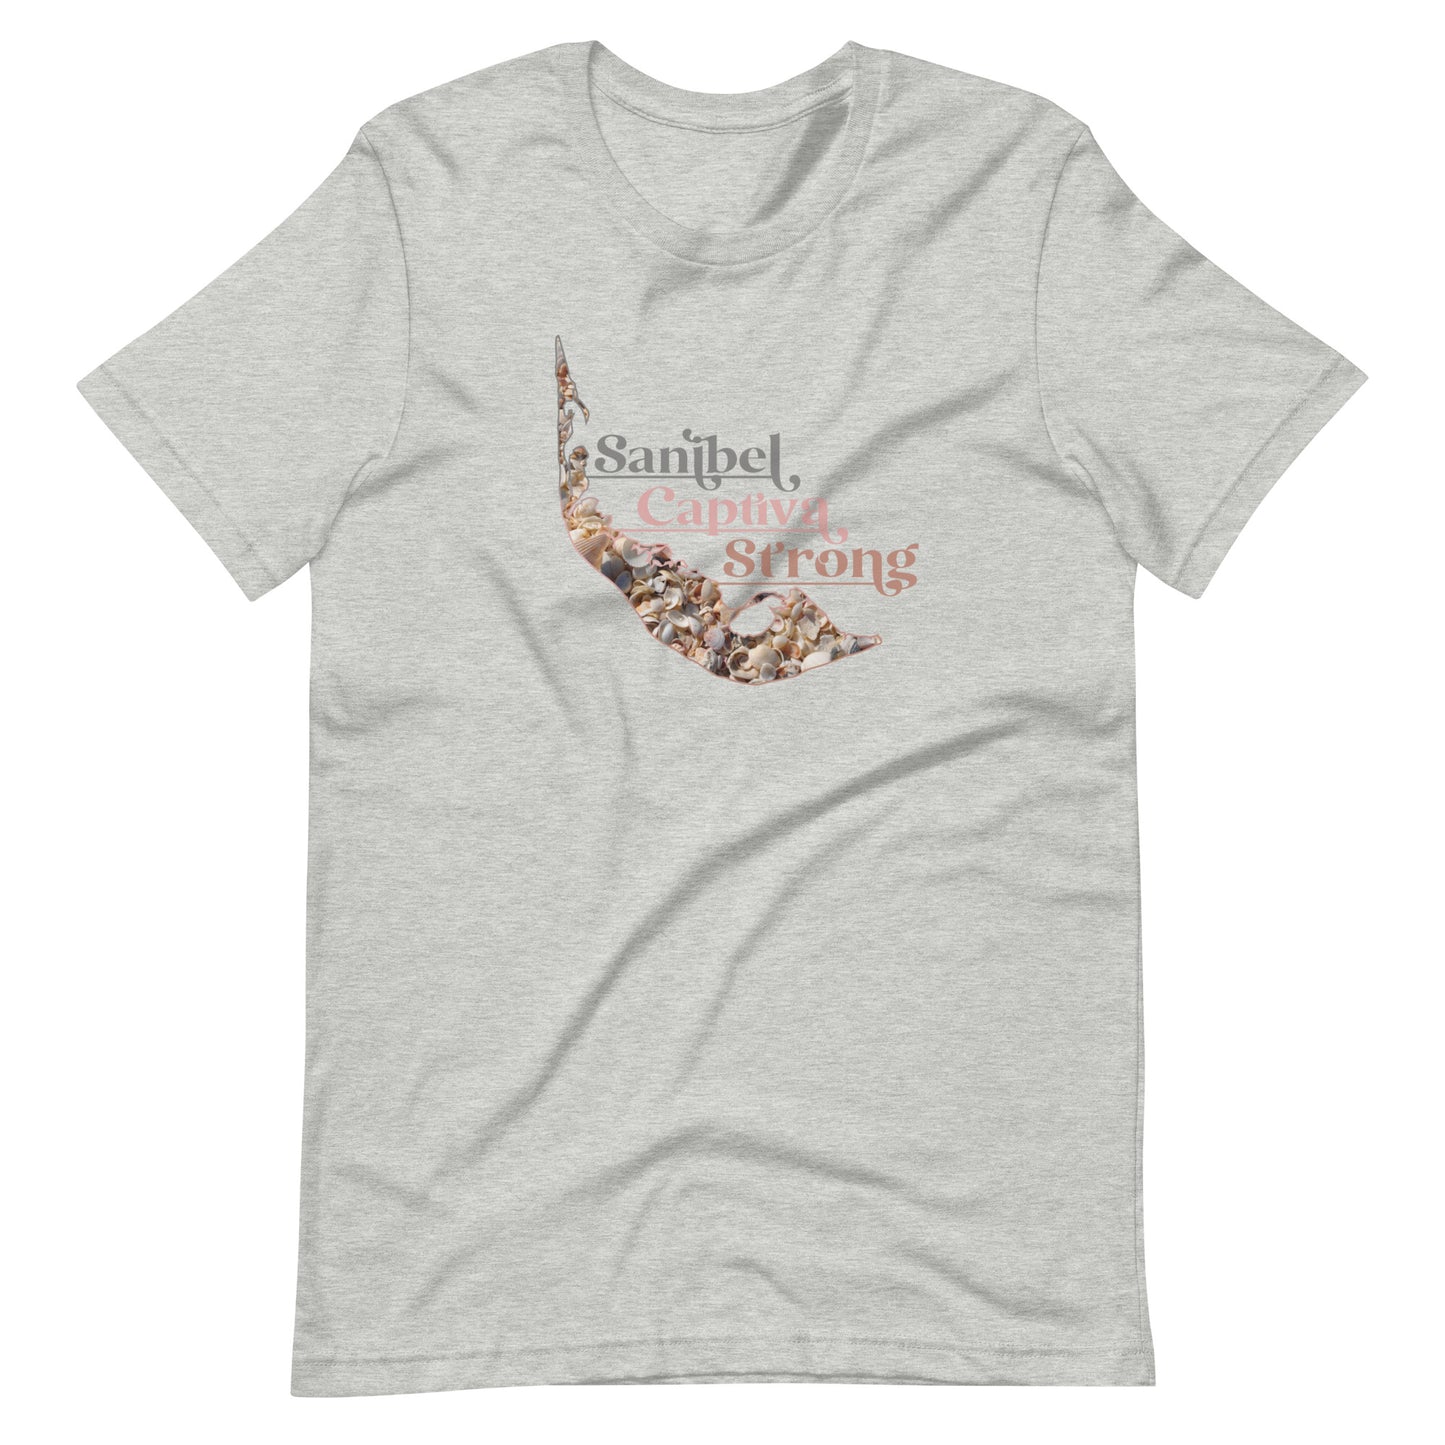 Sanibel Captiva Strong Shell T-Shirt